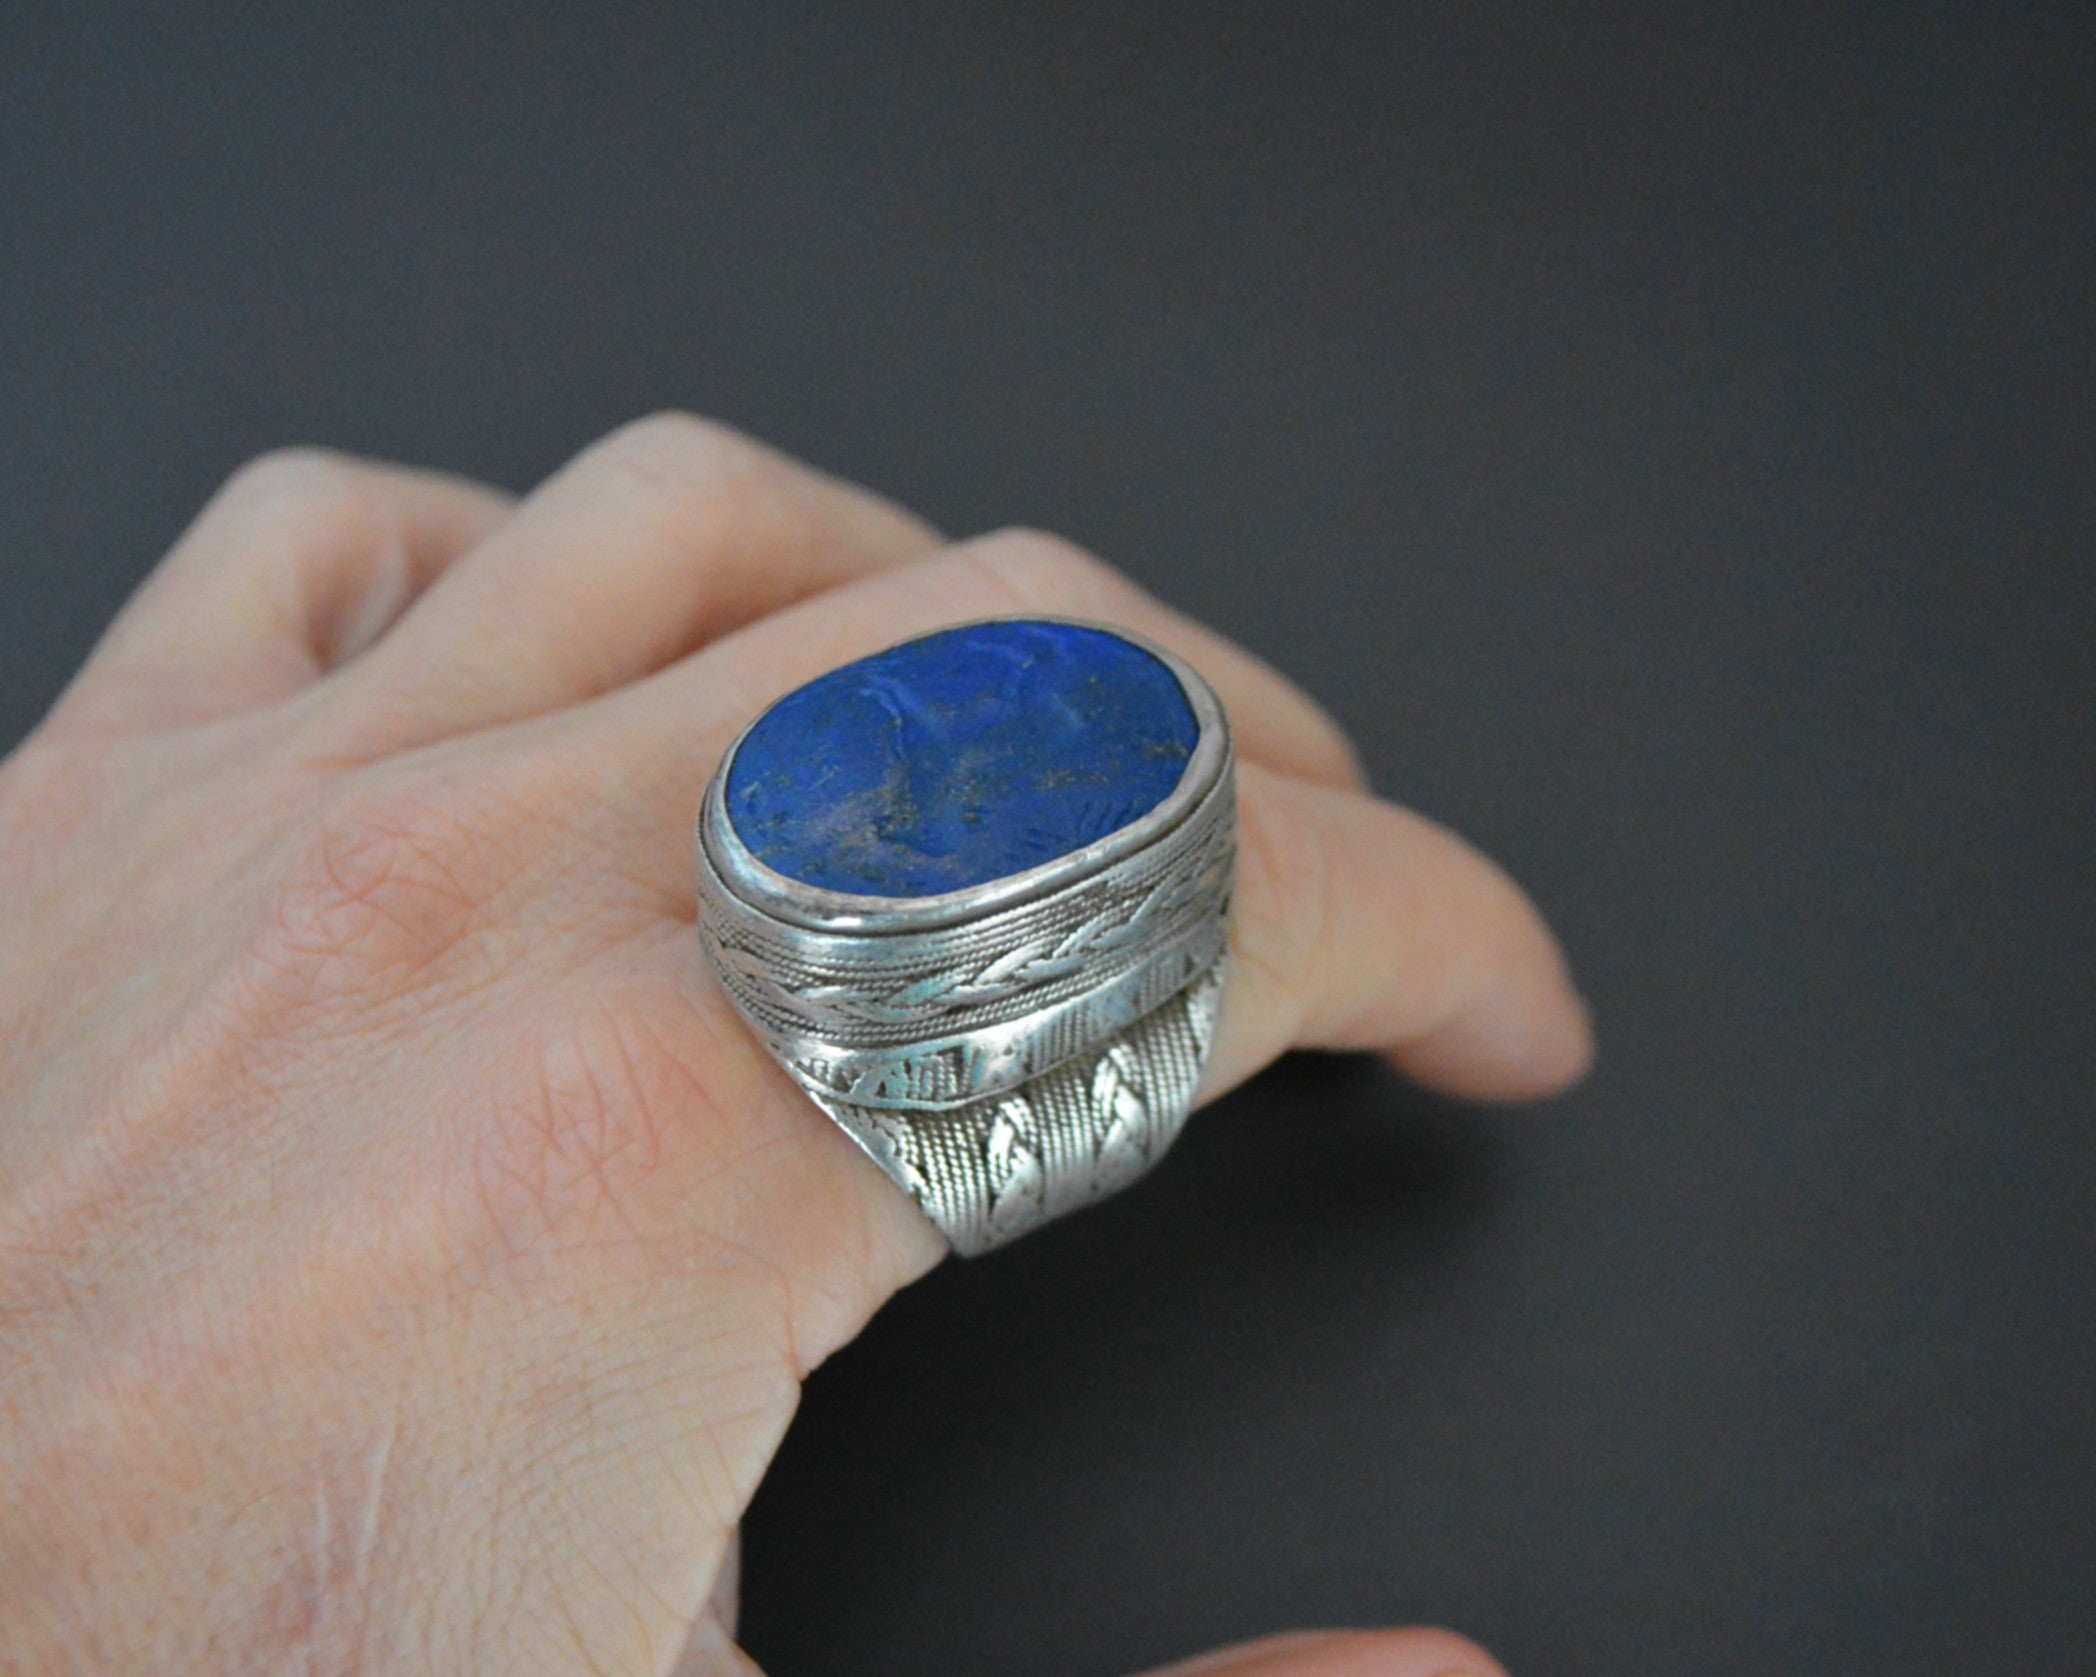 Afghani Lapis Lazuli Intaglio Ring  - Size 10.5